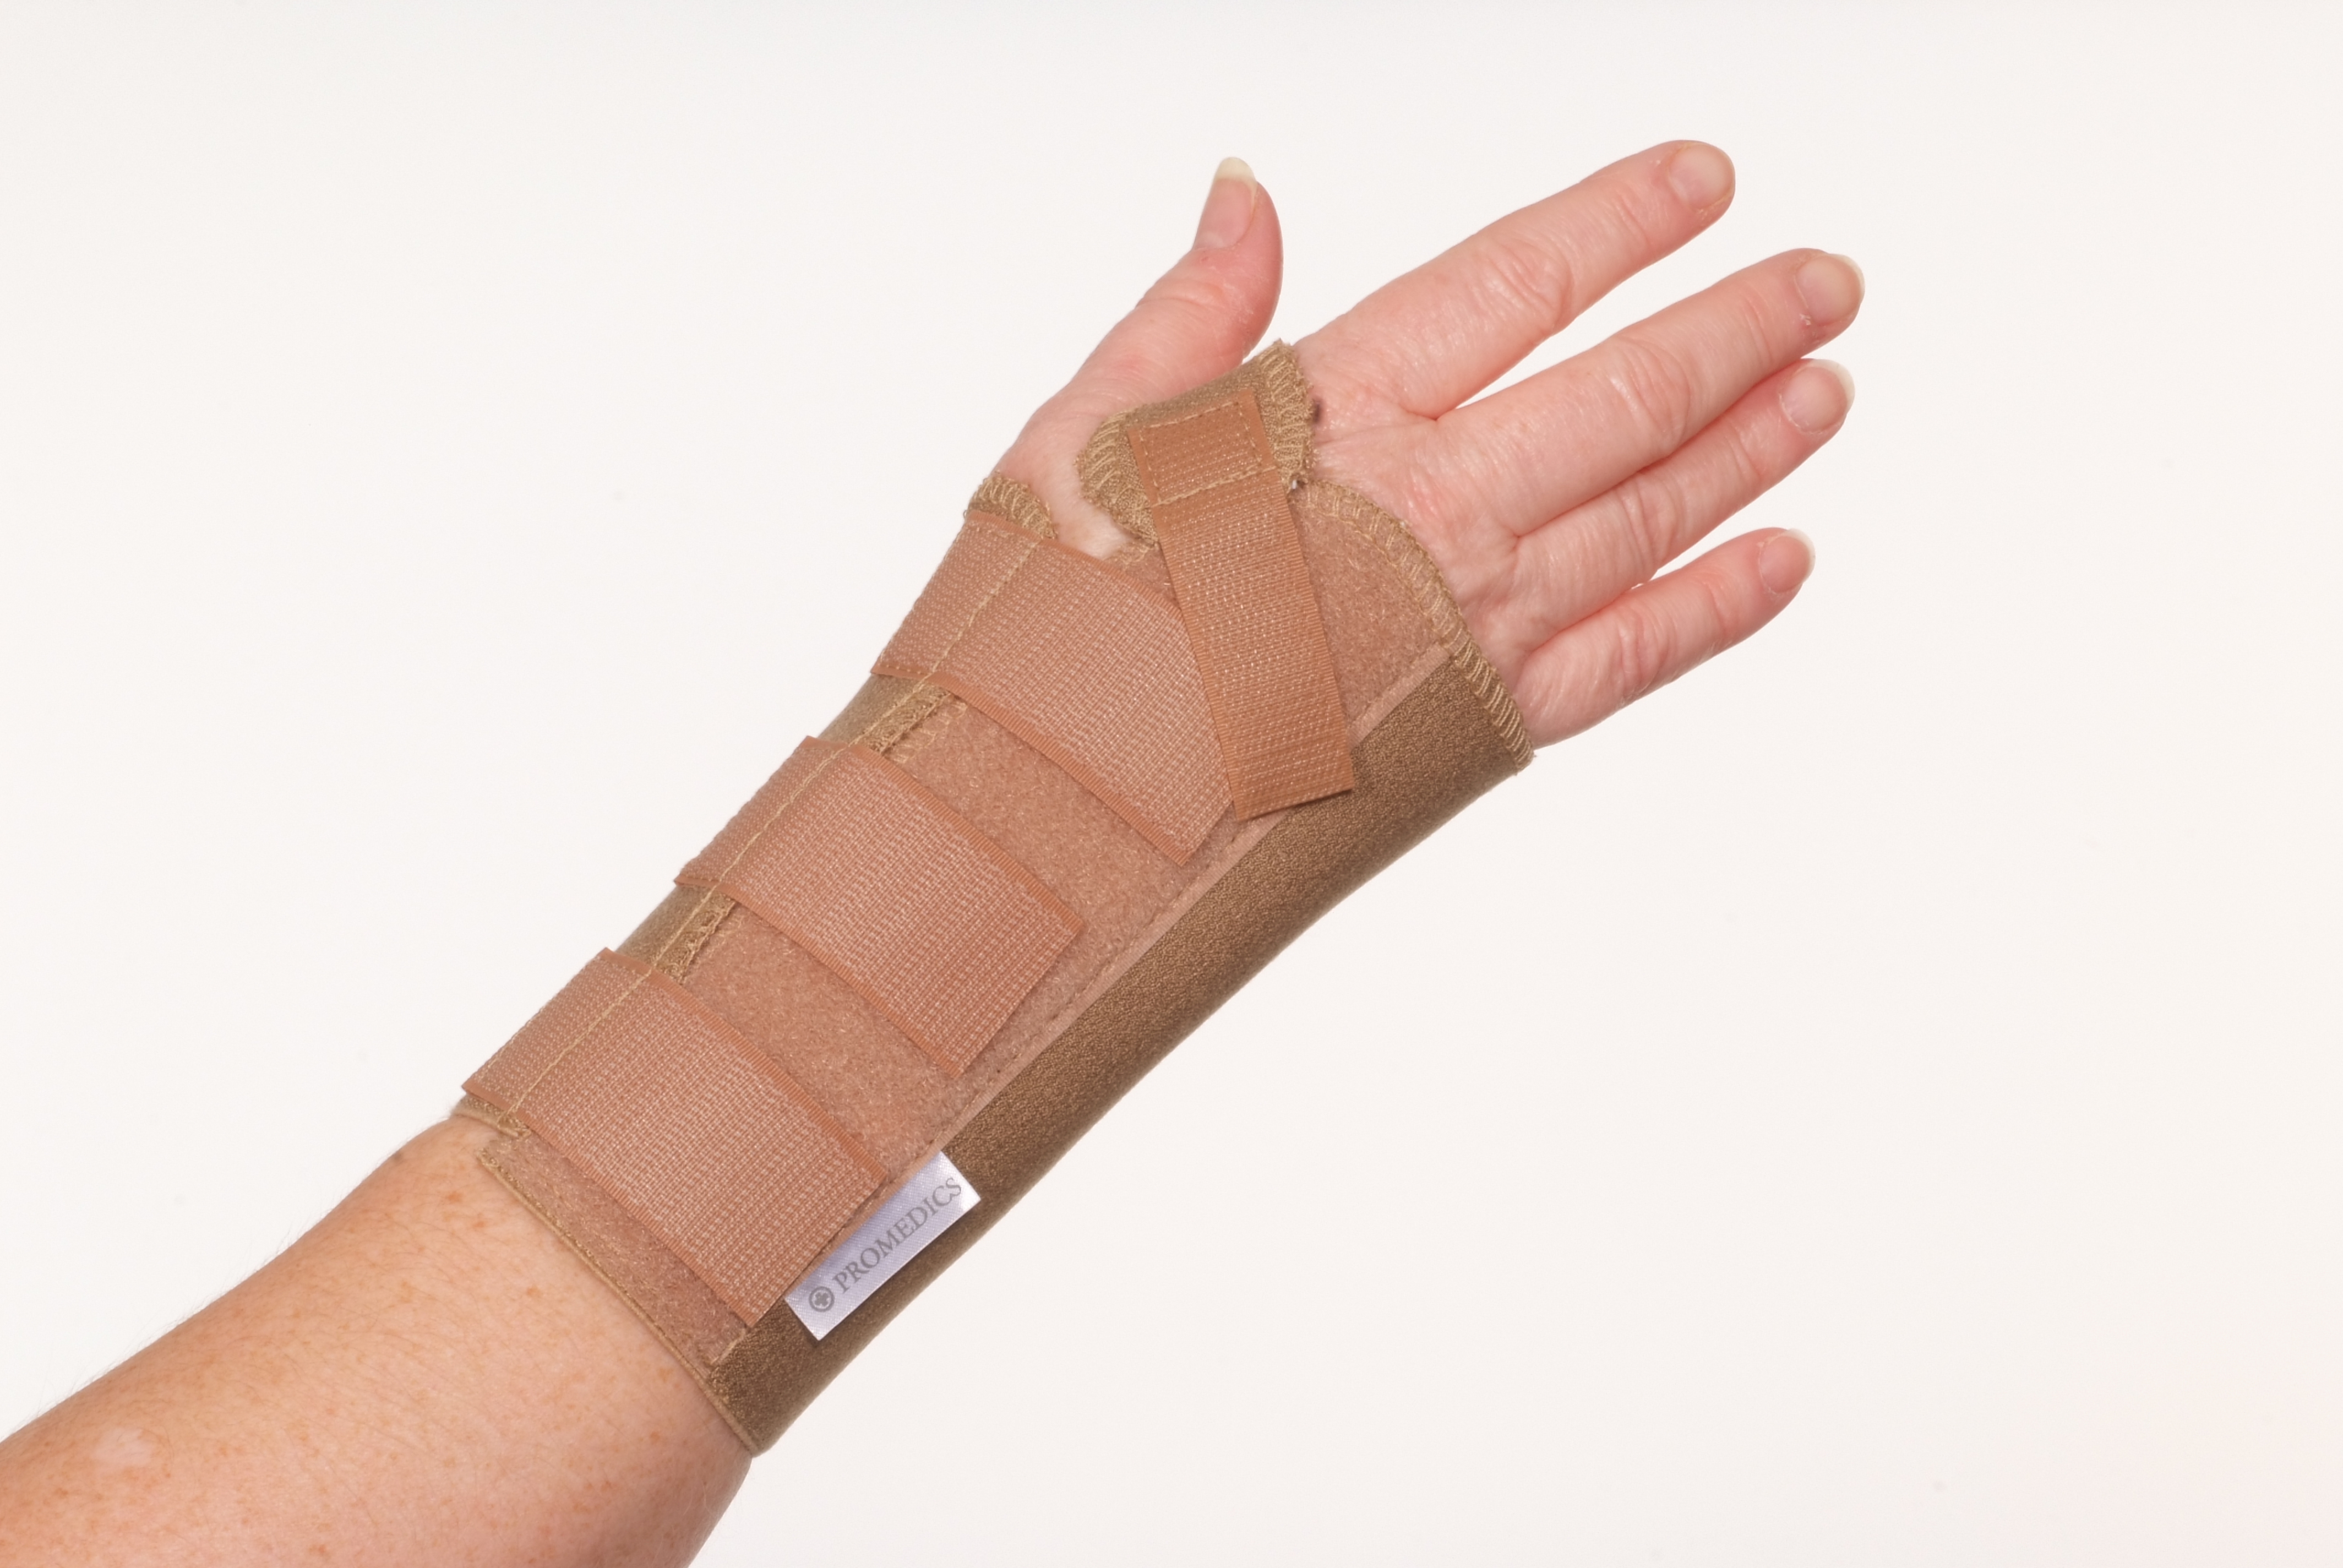 Wrist splint